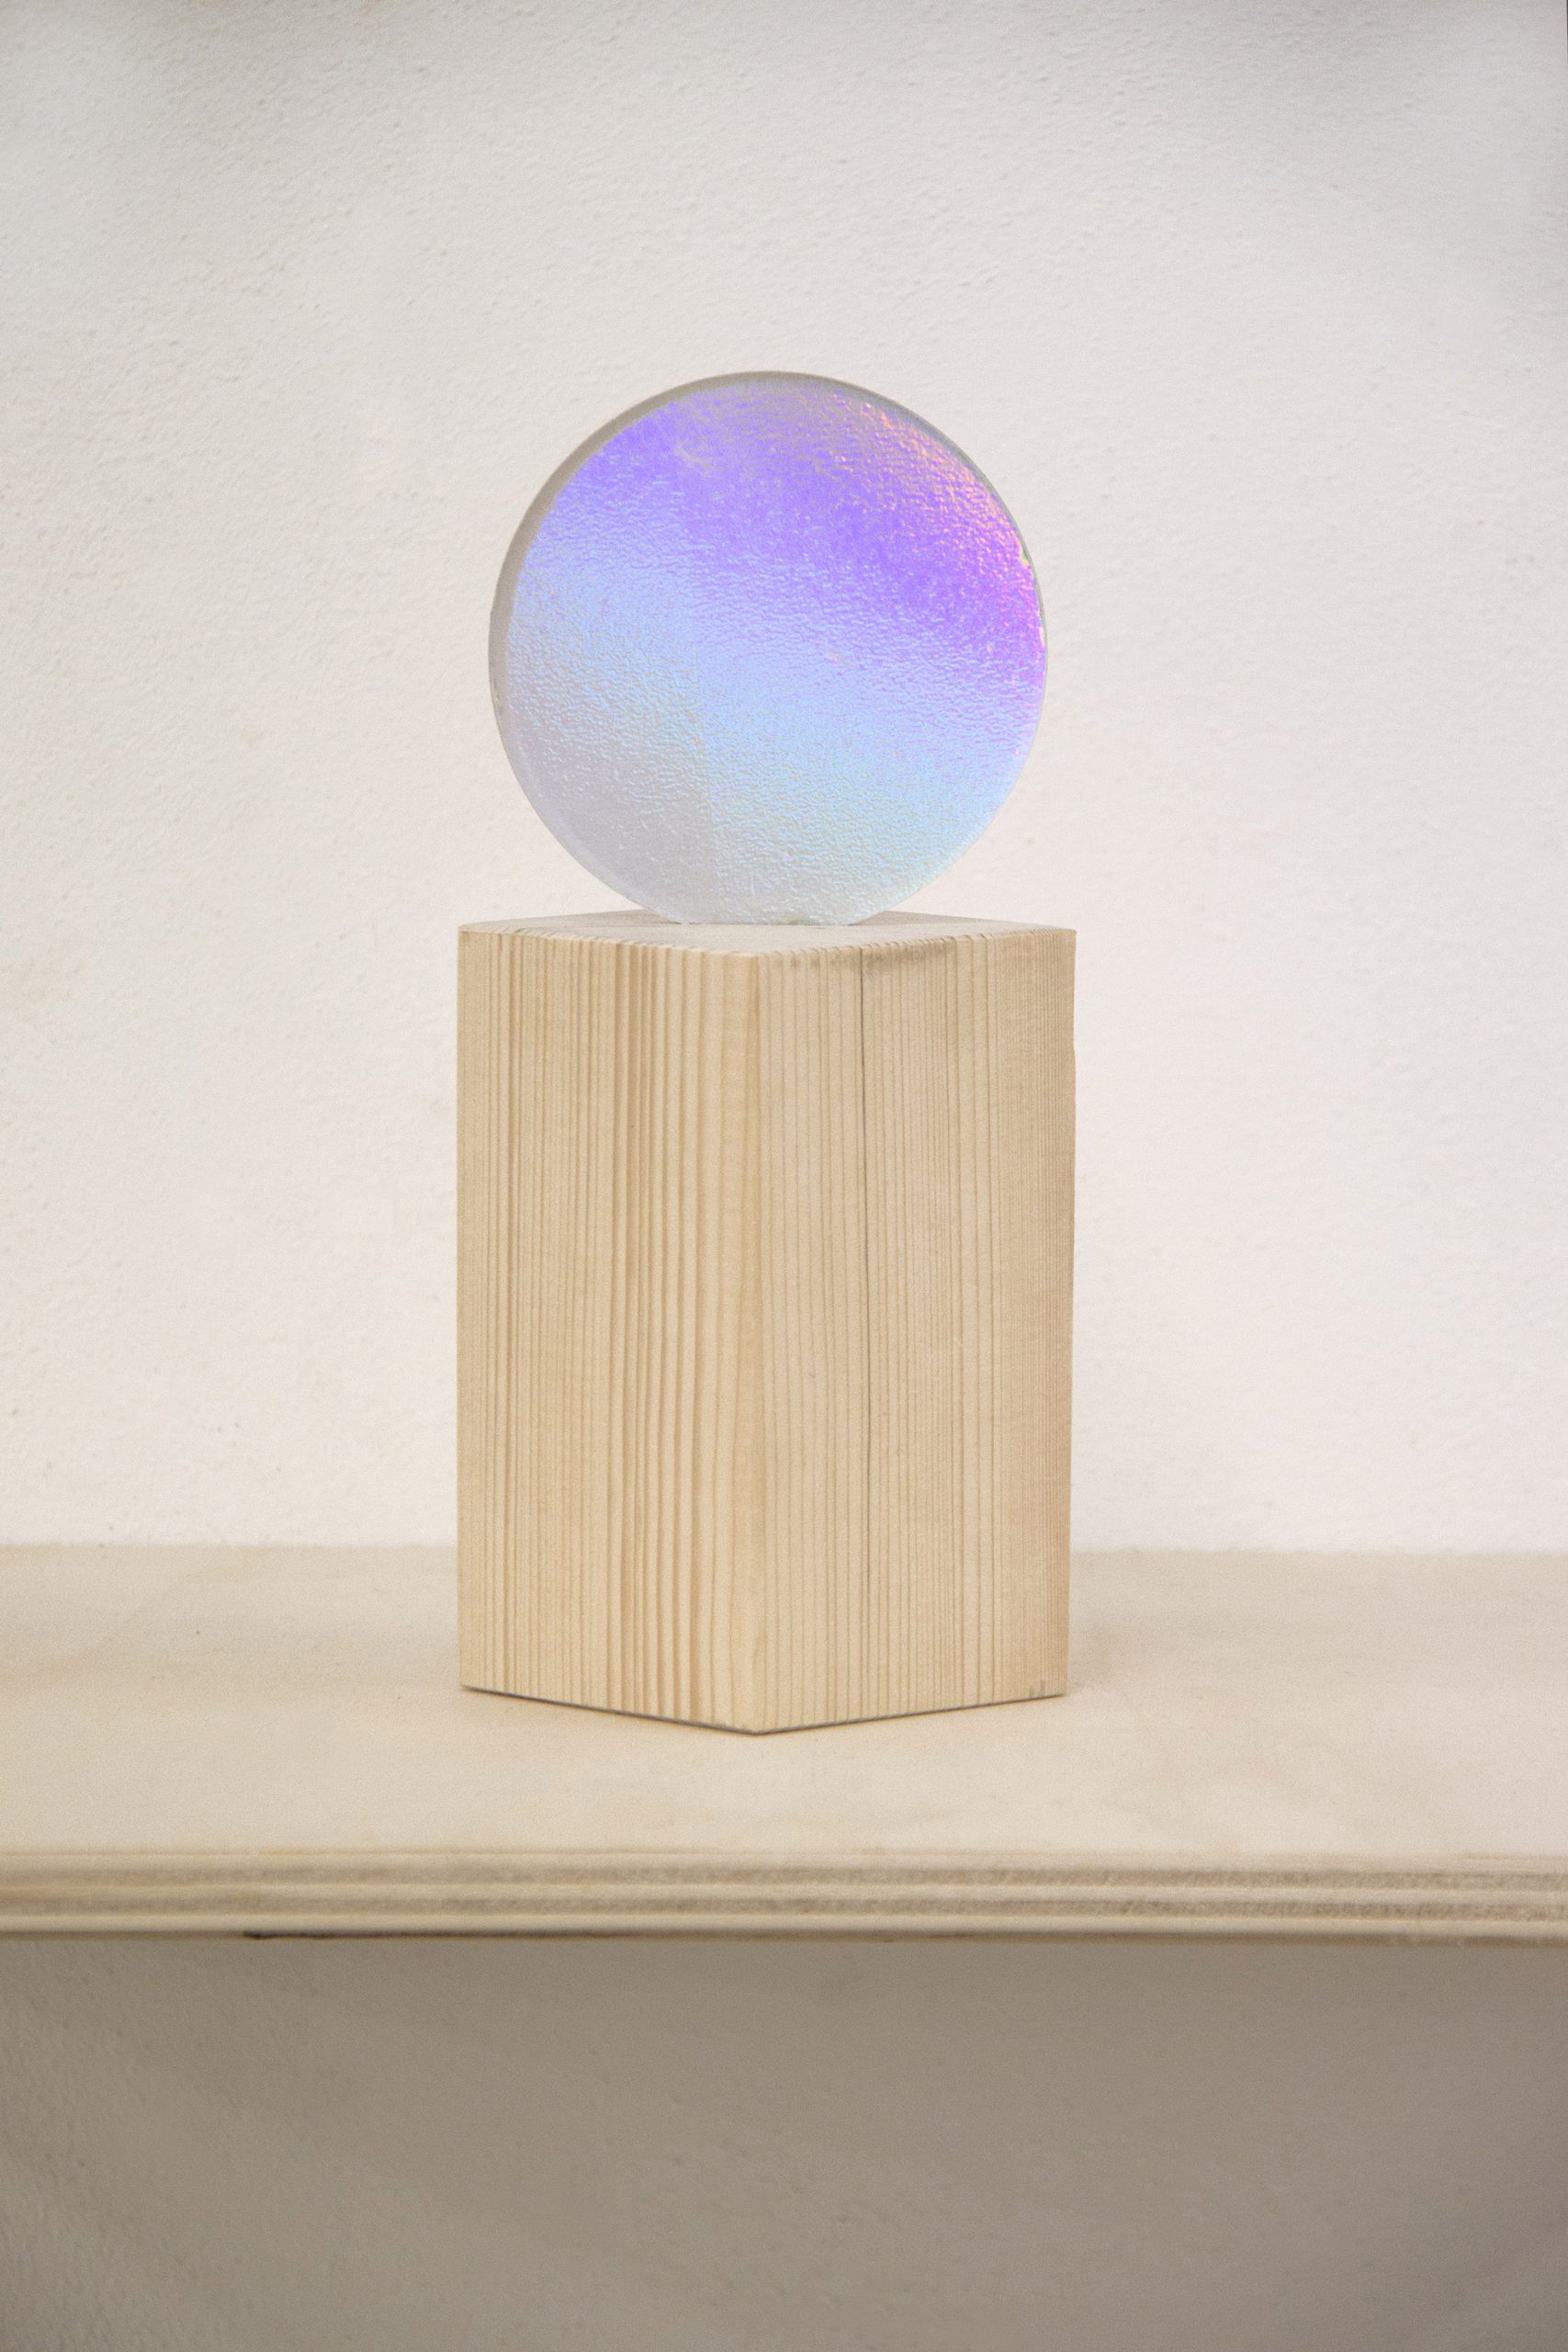 Giulia Fumagalli, “Cerchi di cielo - cosmo”, 2019, plexiglass, film, wood, 25 x 11 x 11 cm